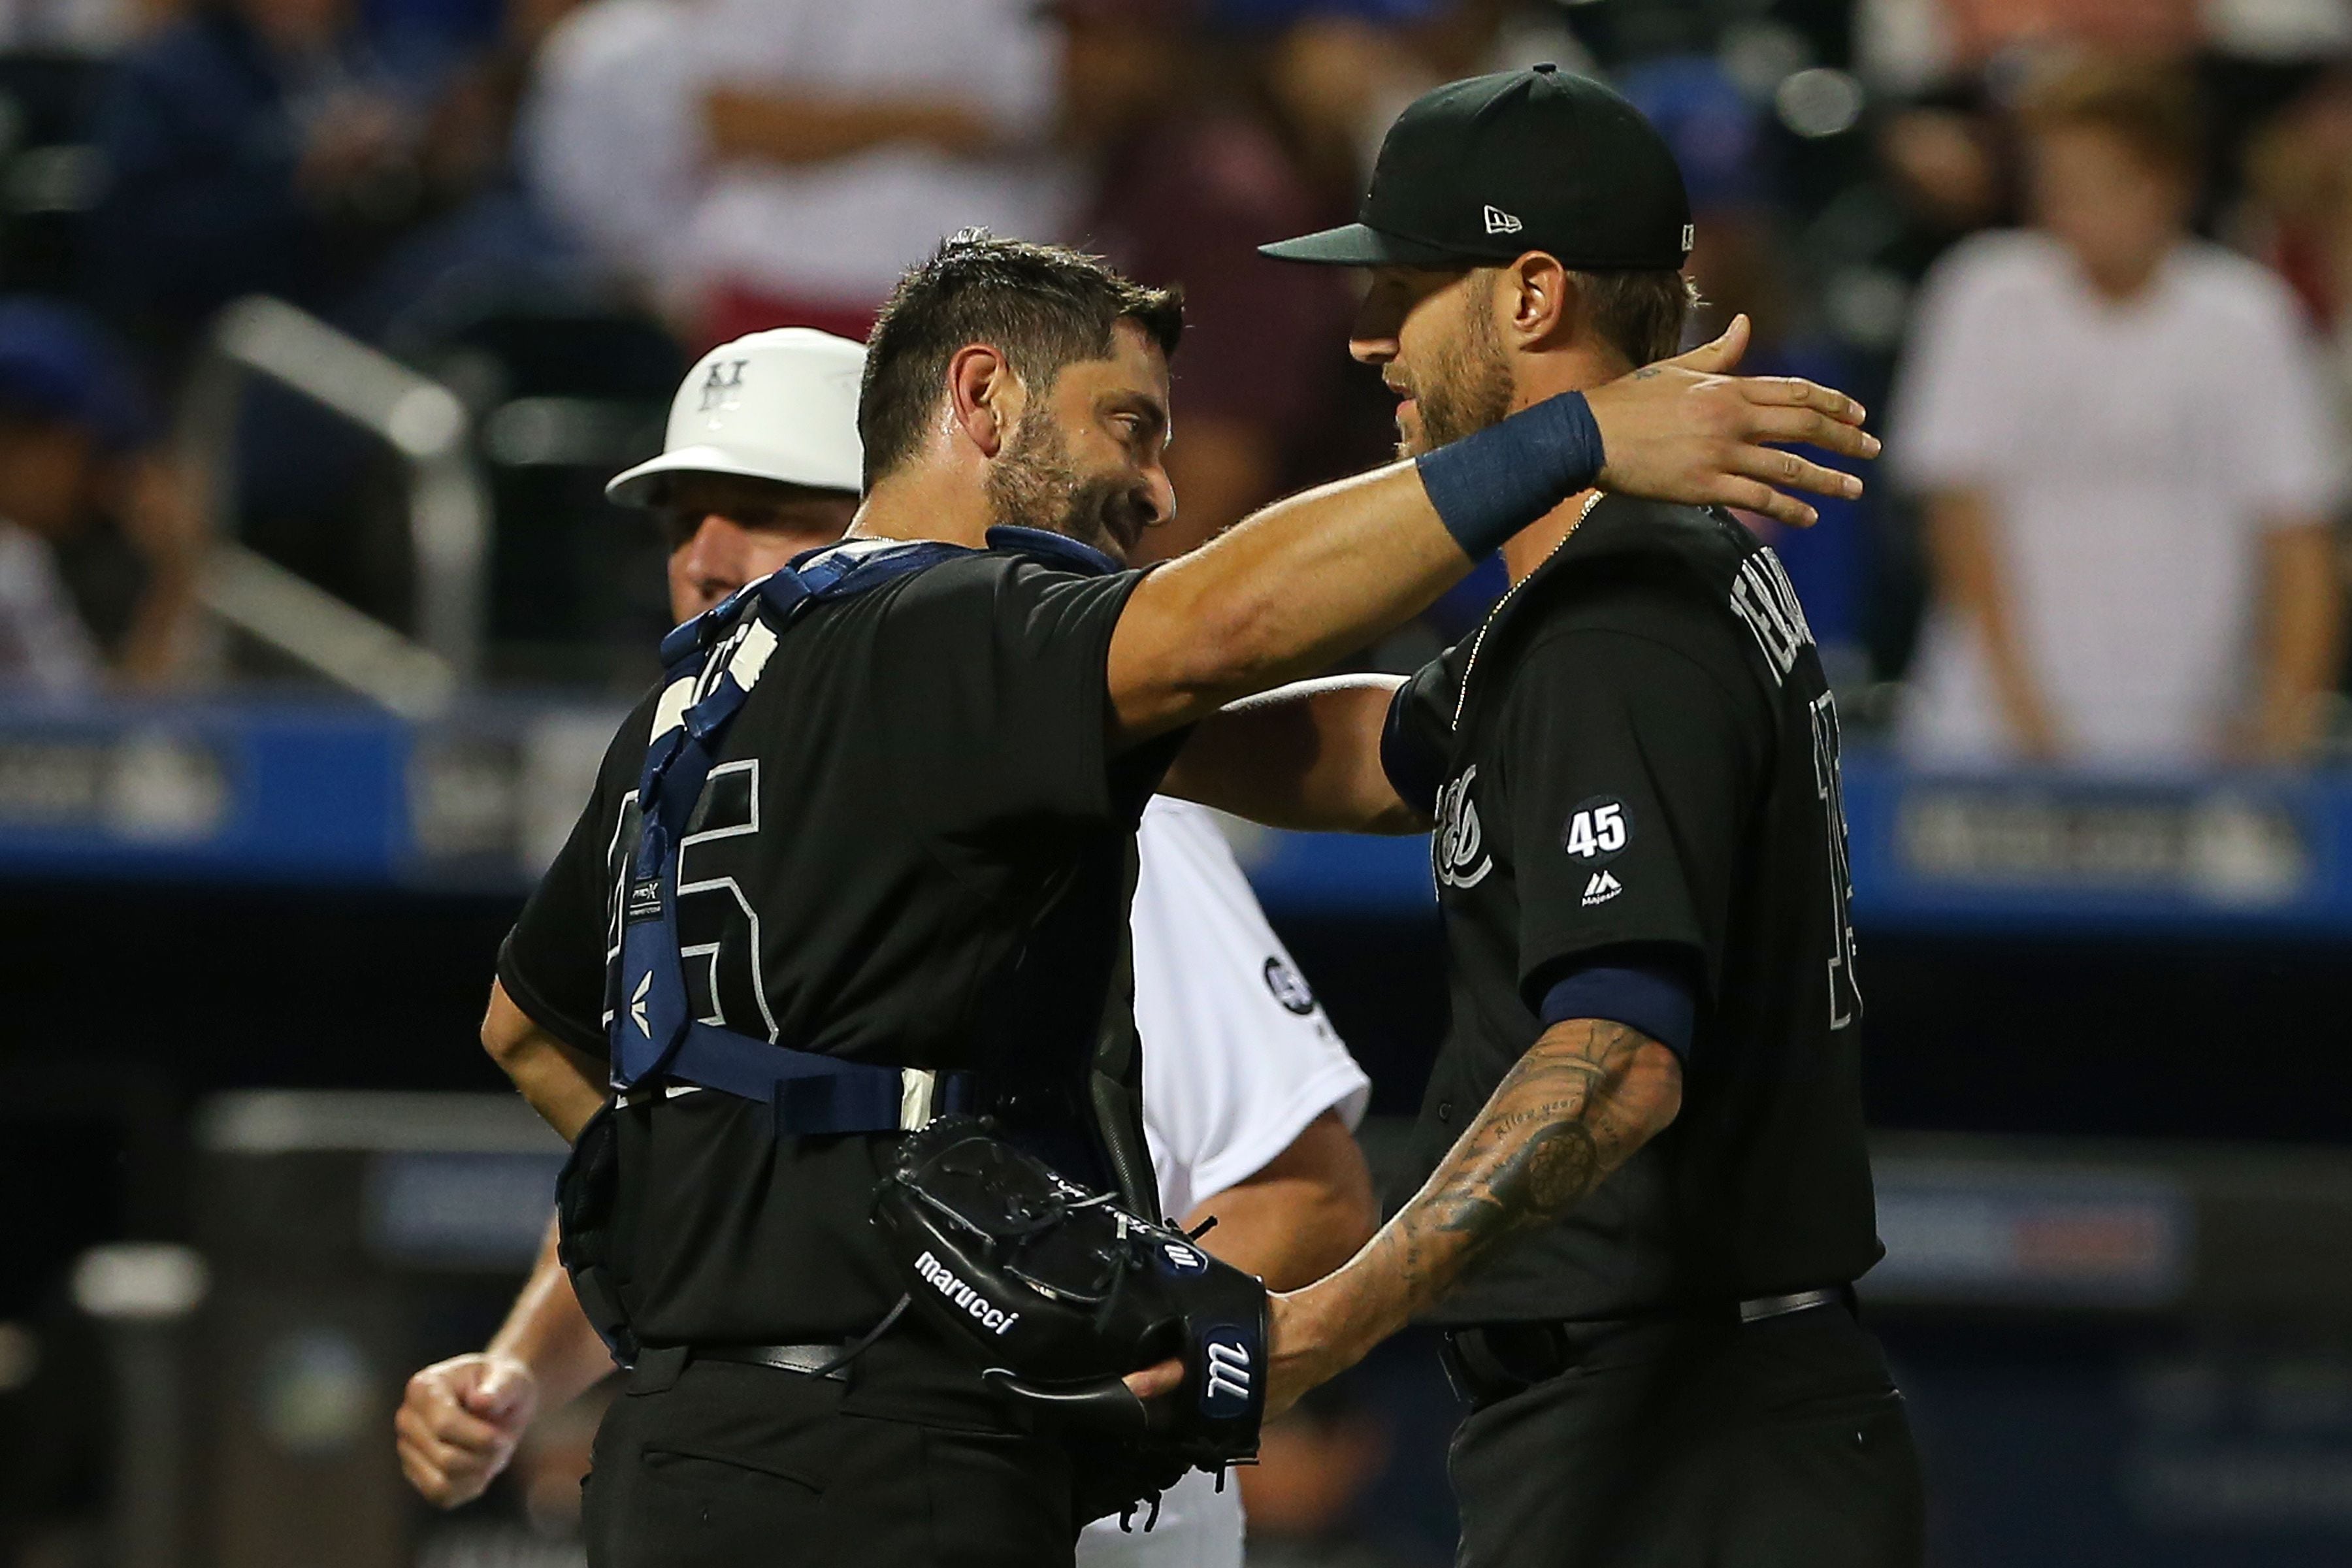 Yankees to wear black uniforms during Players Weekend